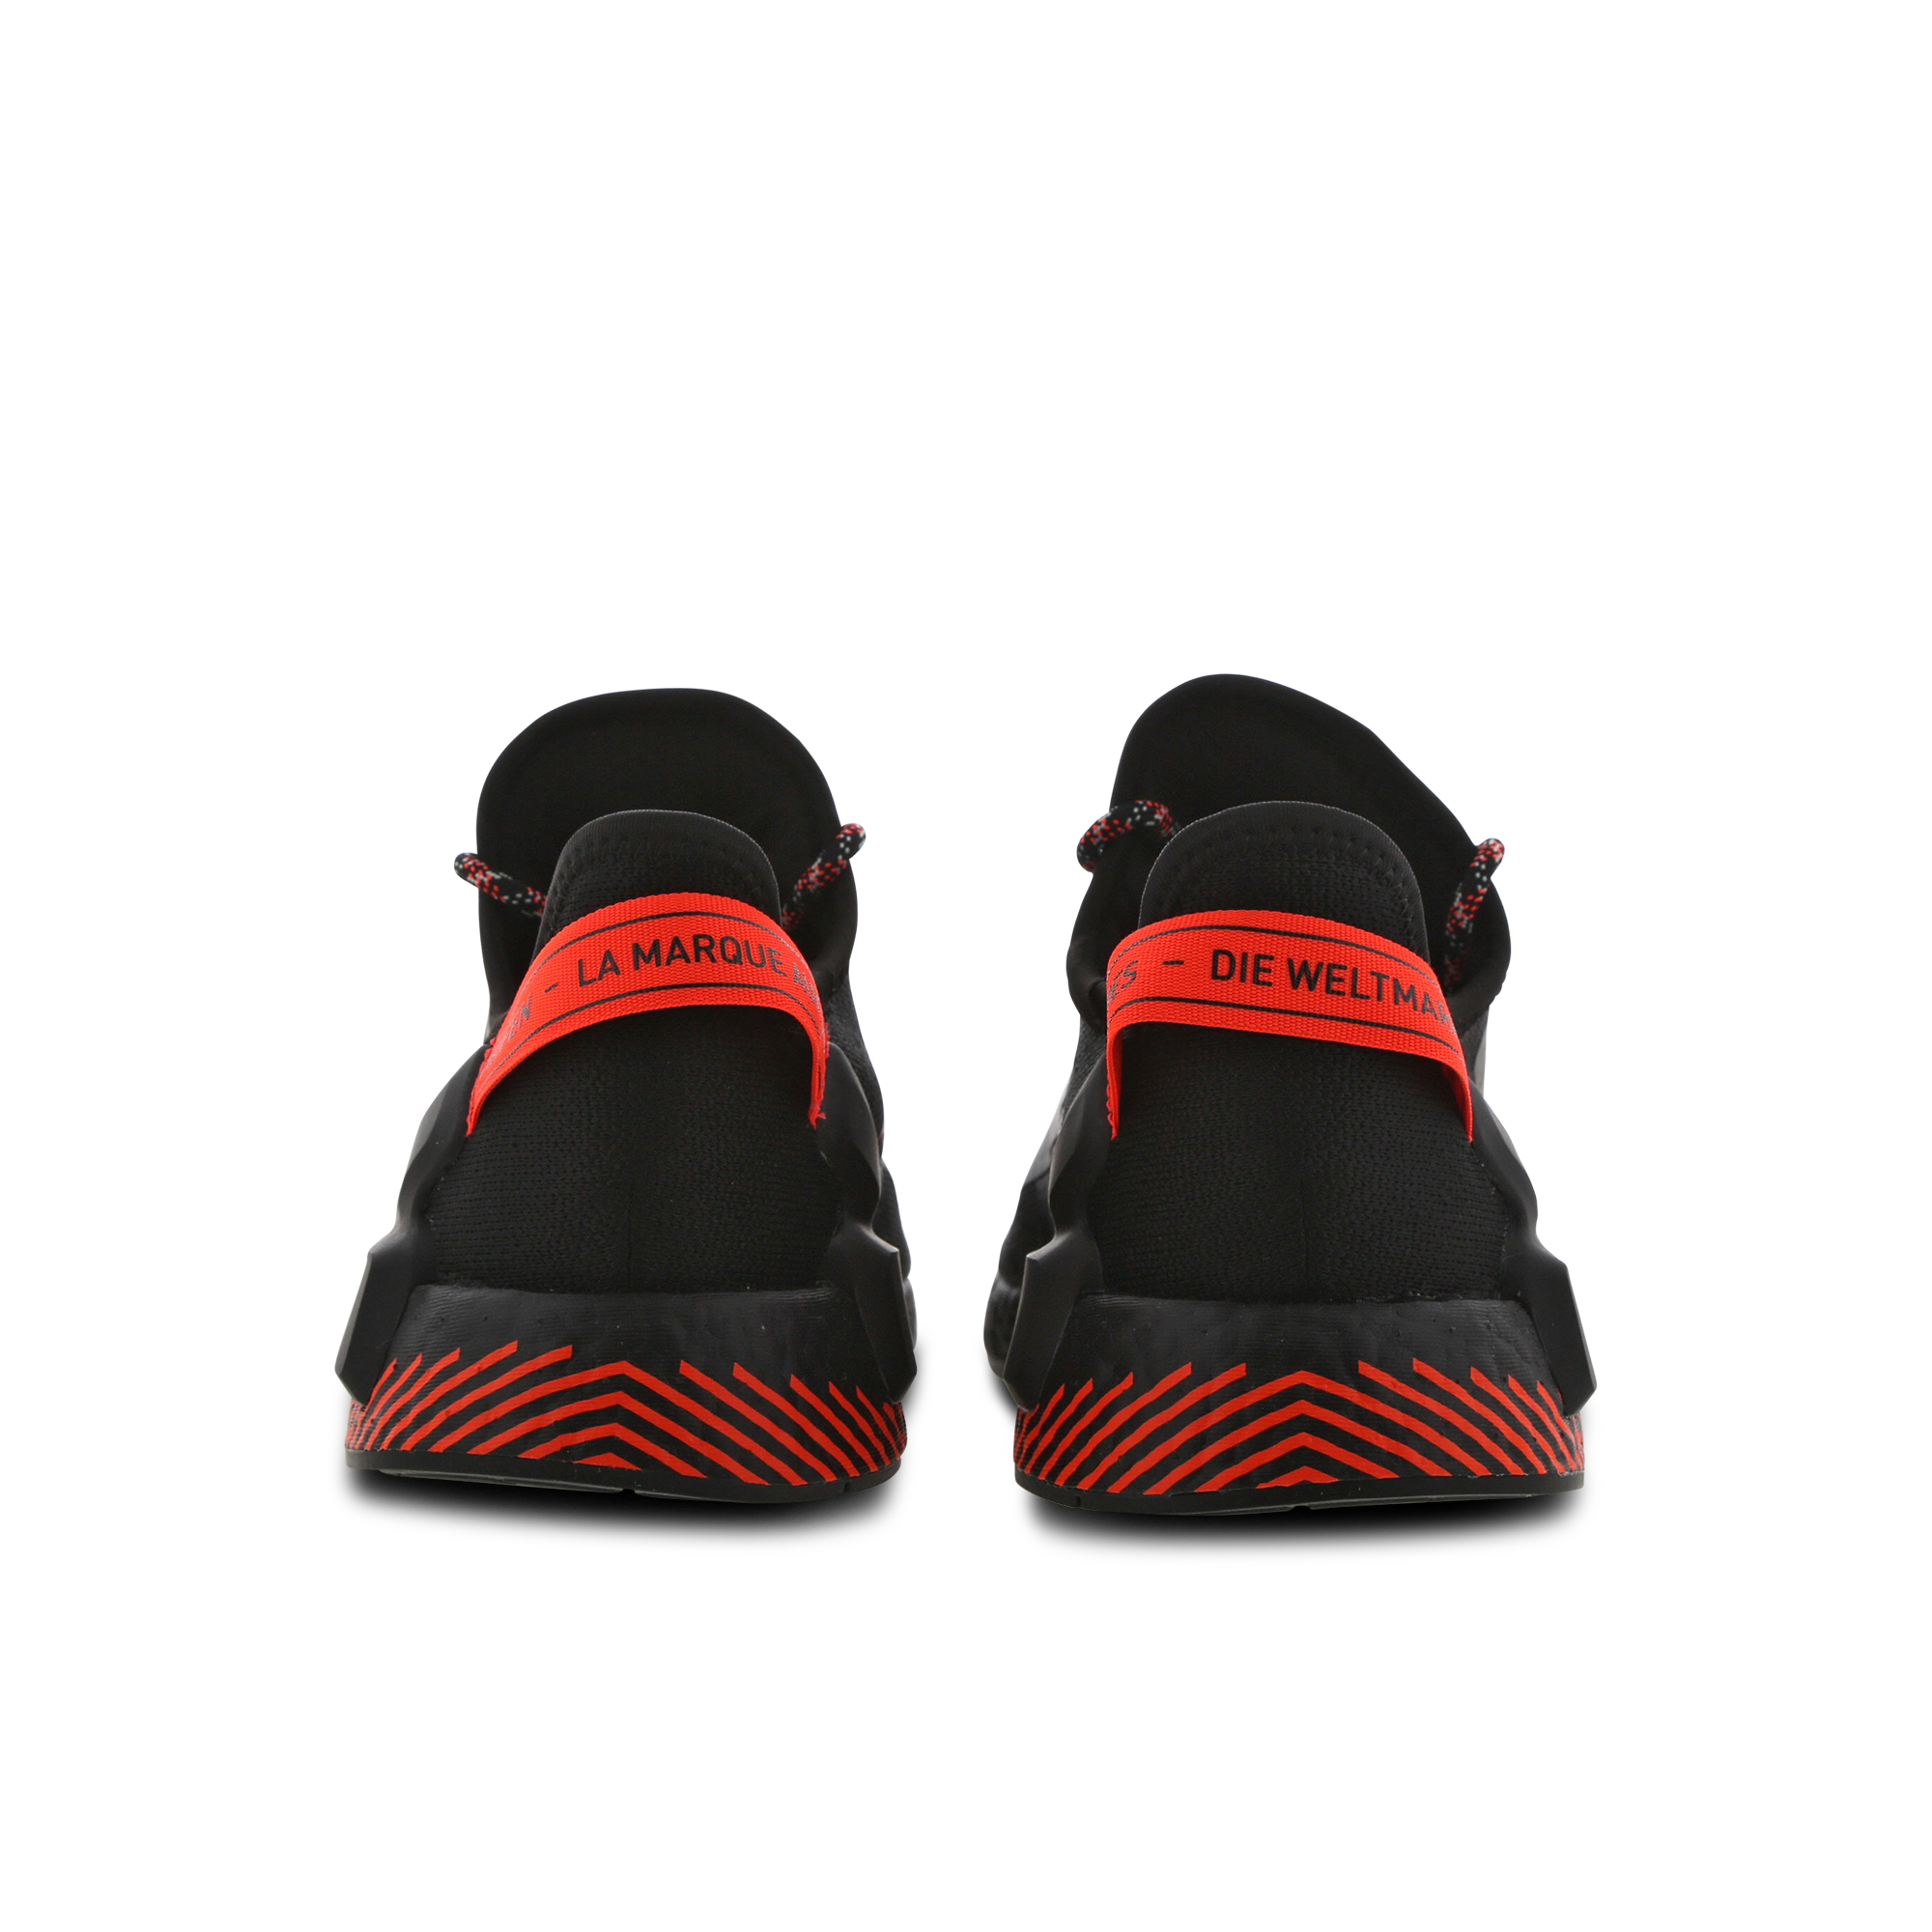 Adidas Shoes Nmd R1 Pk Energy Aqua And Trace Orange